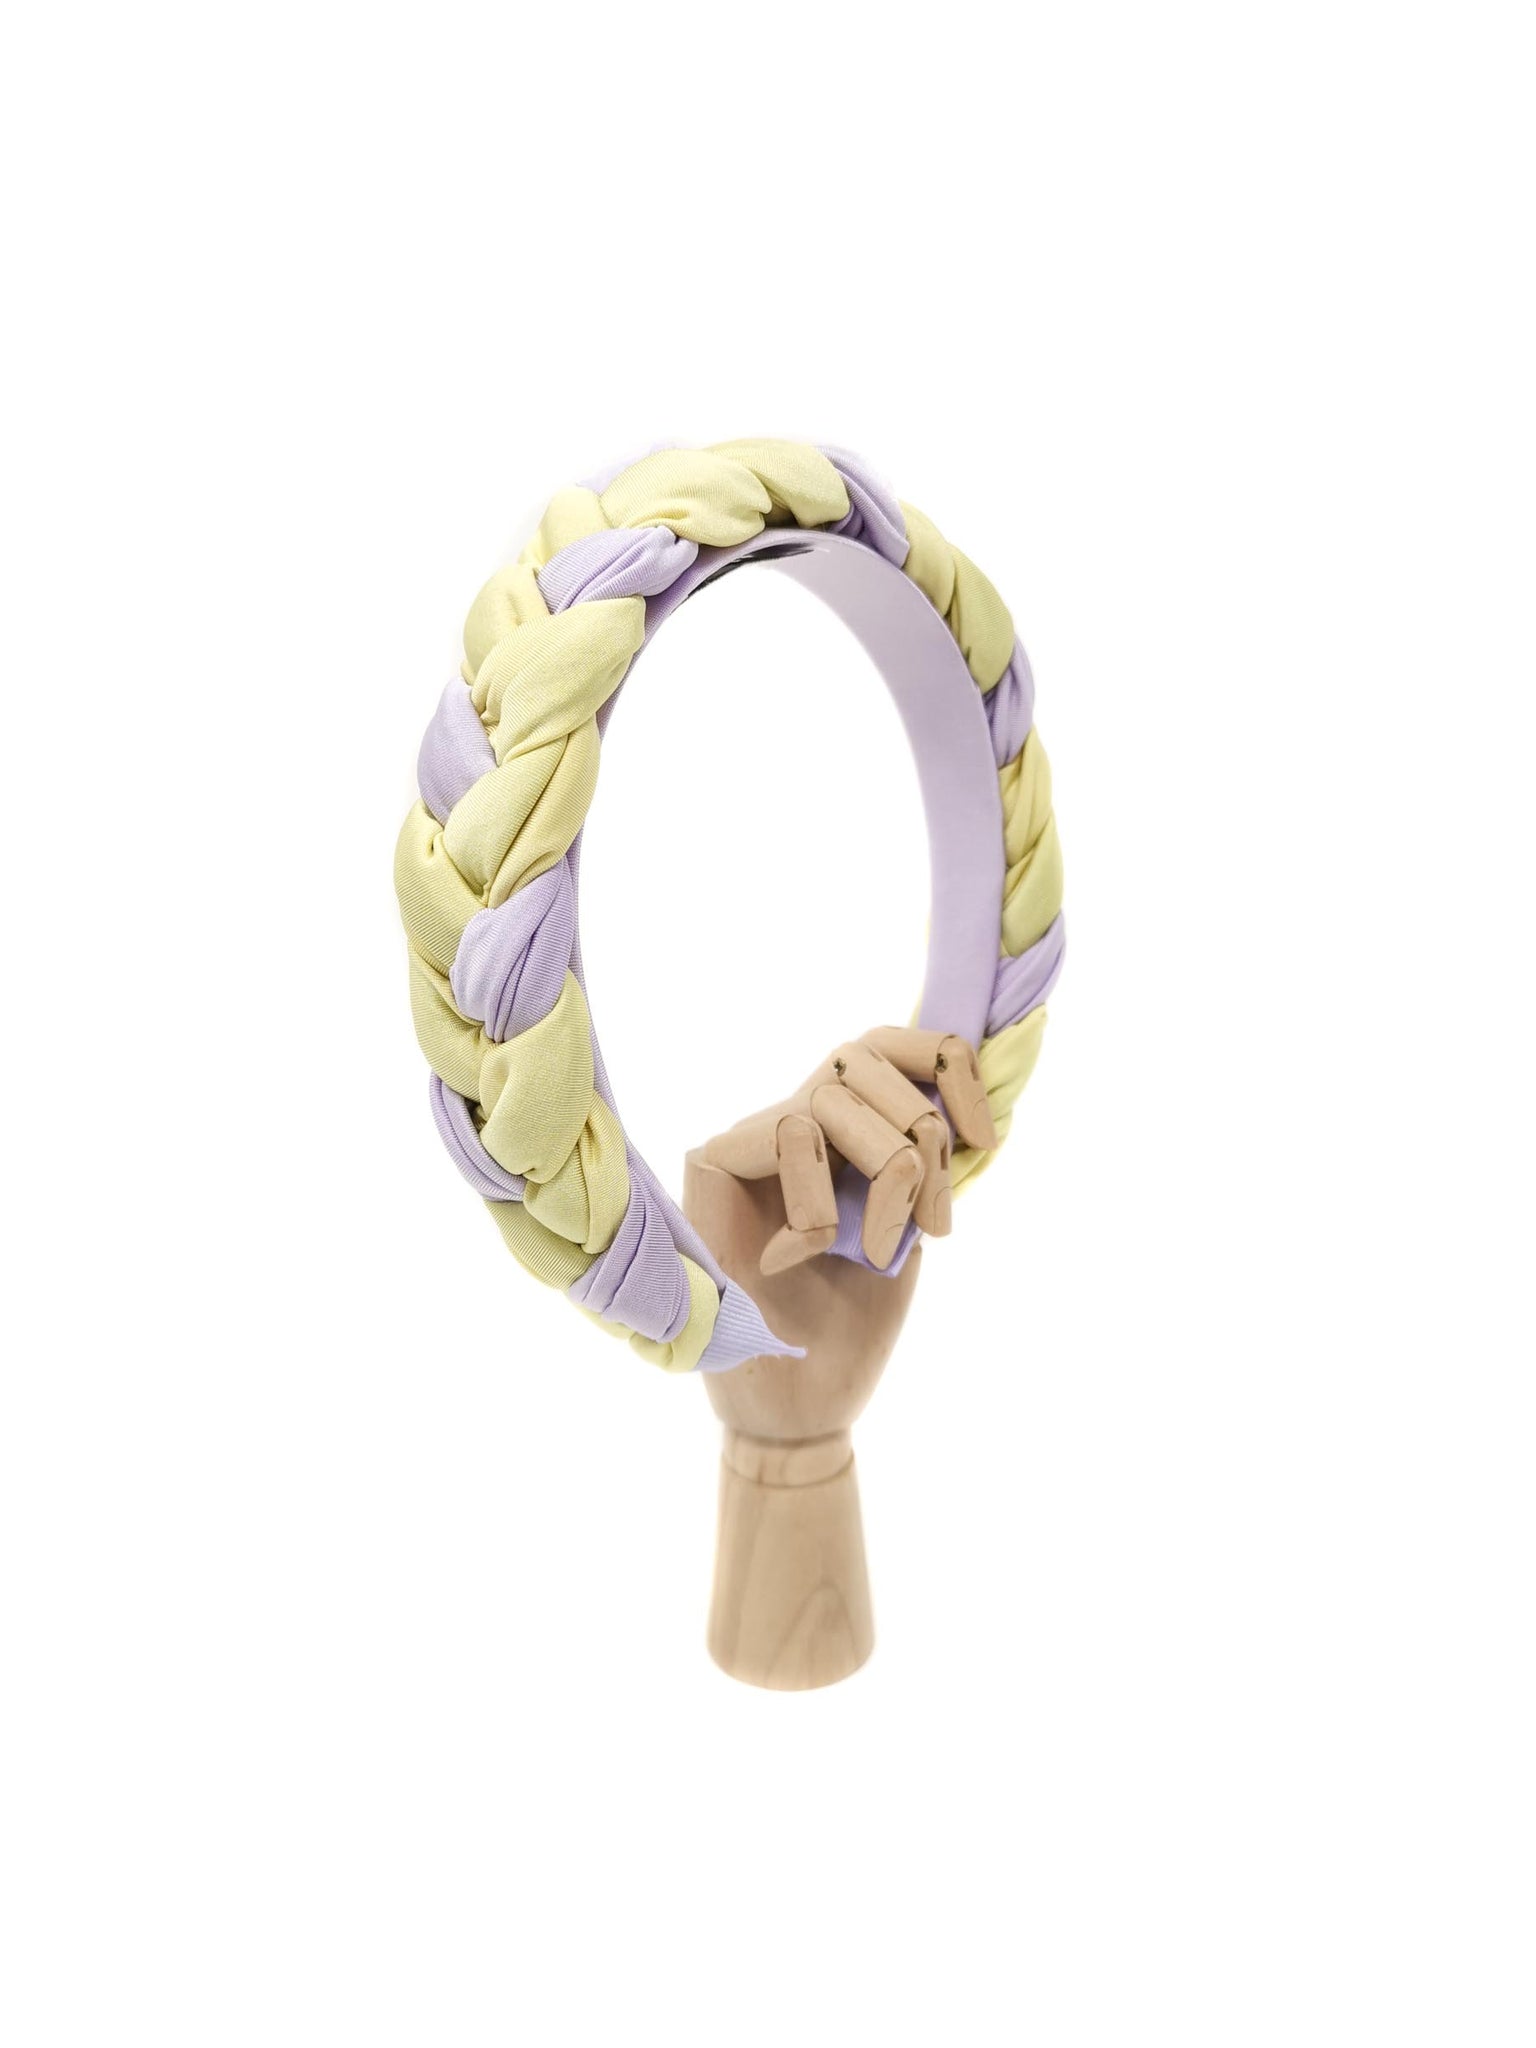 "Frida" yellow and lilac jersey braided hairband